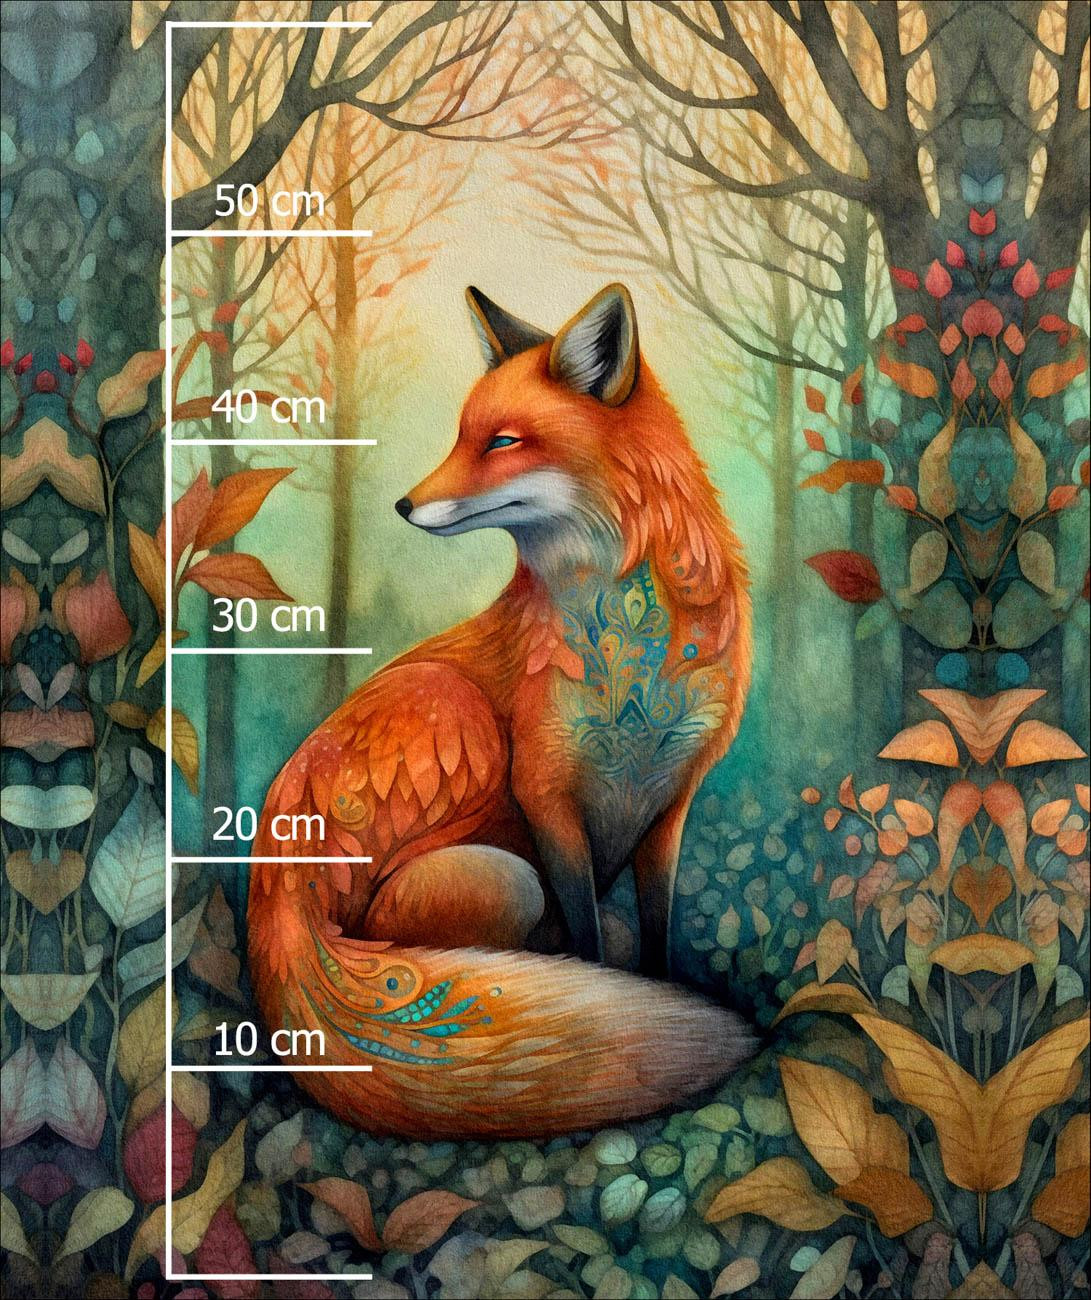 BOHO FOX - PANEL (60cm x 50cm) tkanina wodoodporna